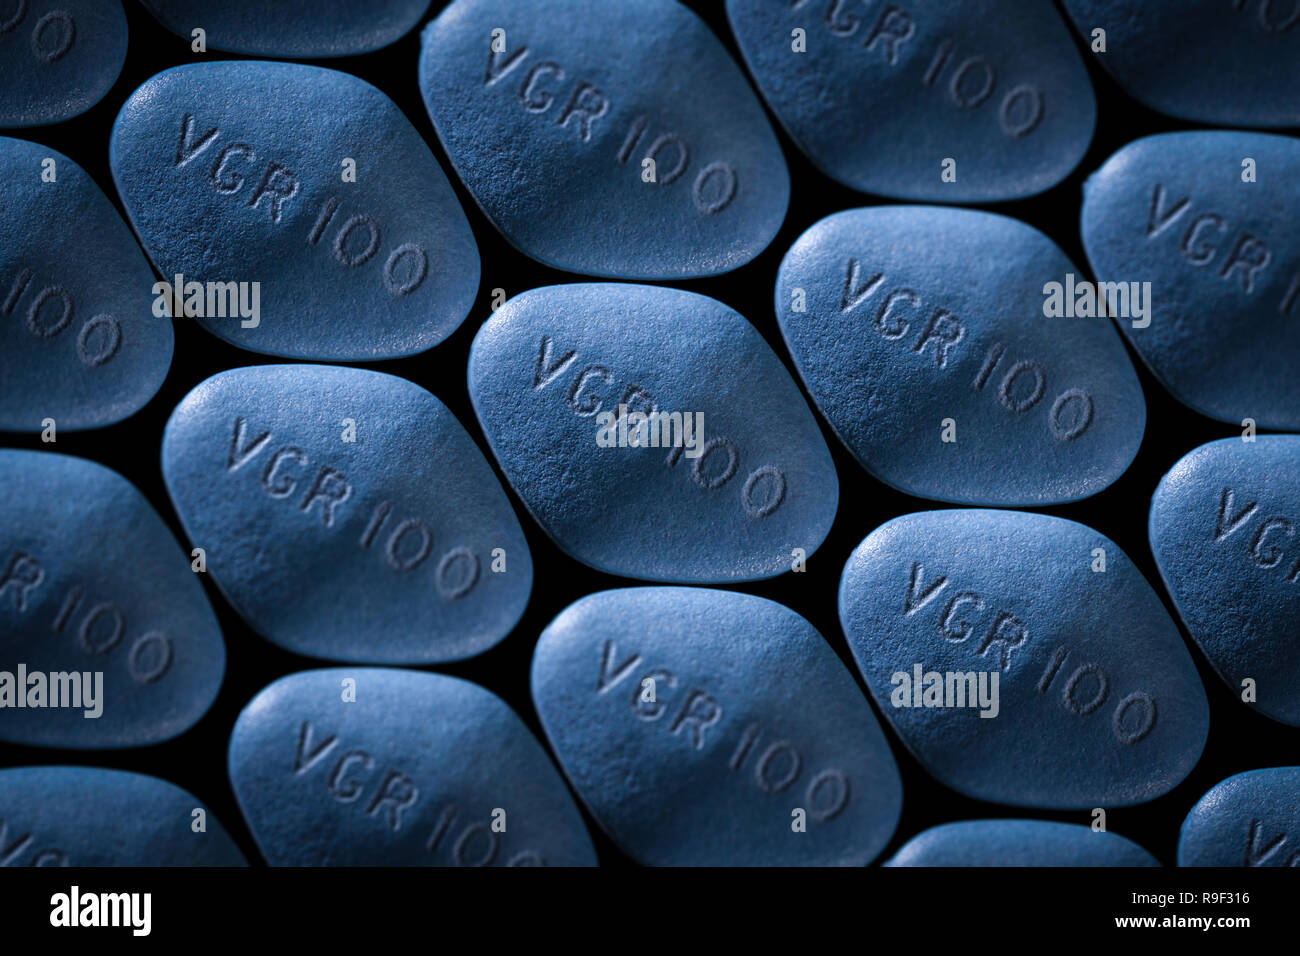 Viagra -Fotos und -Bildmaterial in hoher Auflösung – Alamy